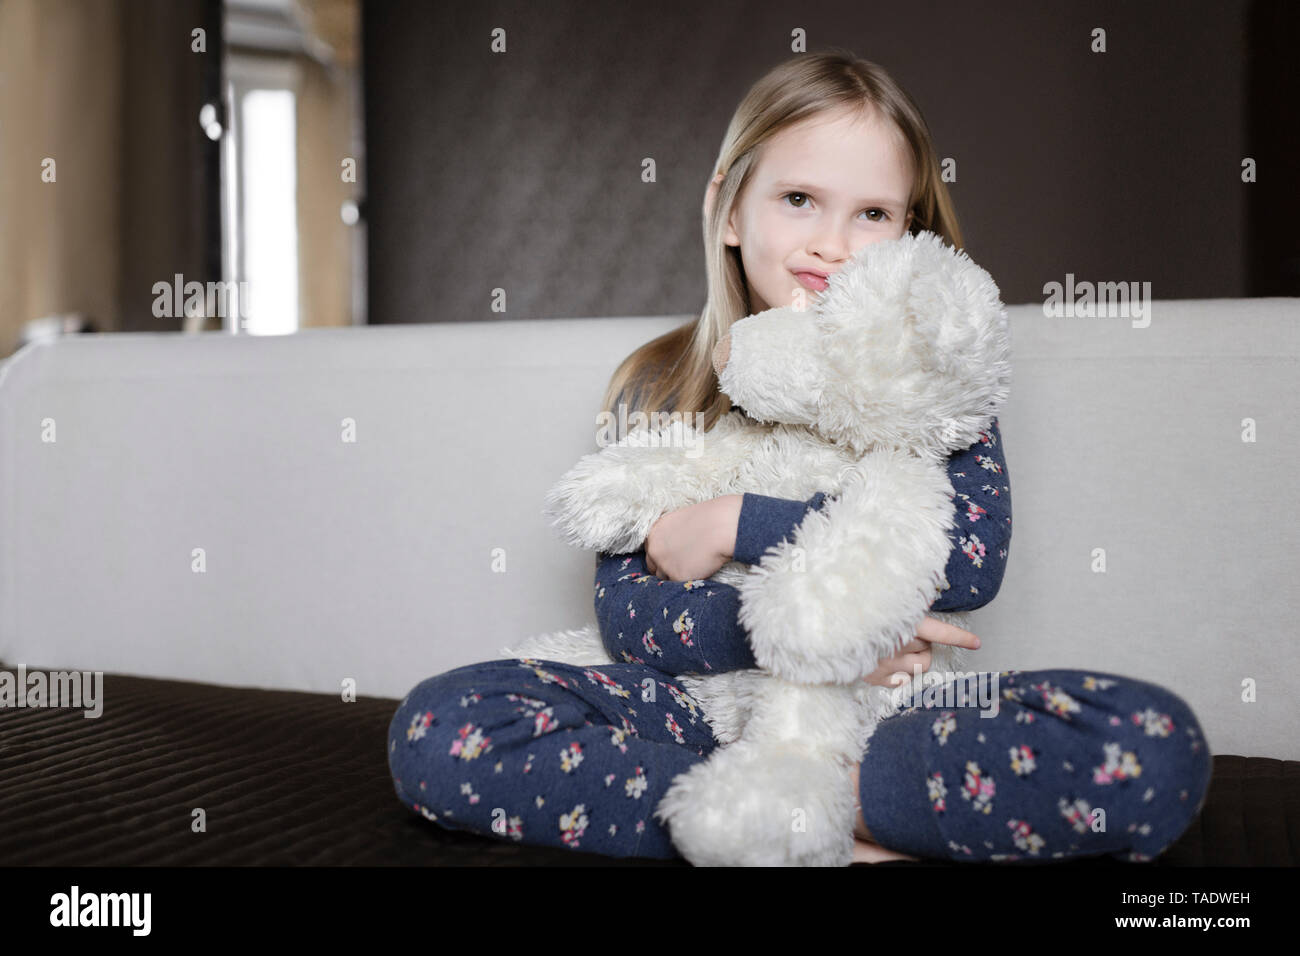 Portrait of smiling little girl wearing pyjamas avec floral design holding white teddy bear Banque D'Images